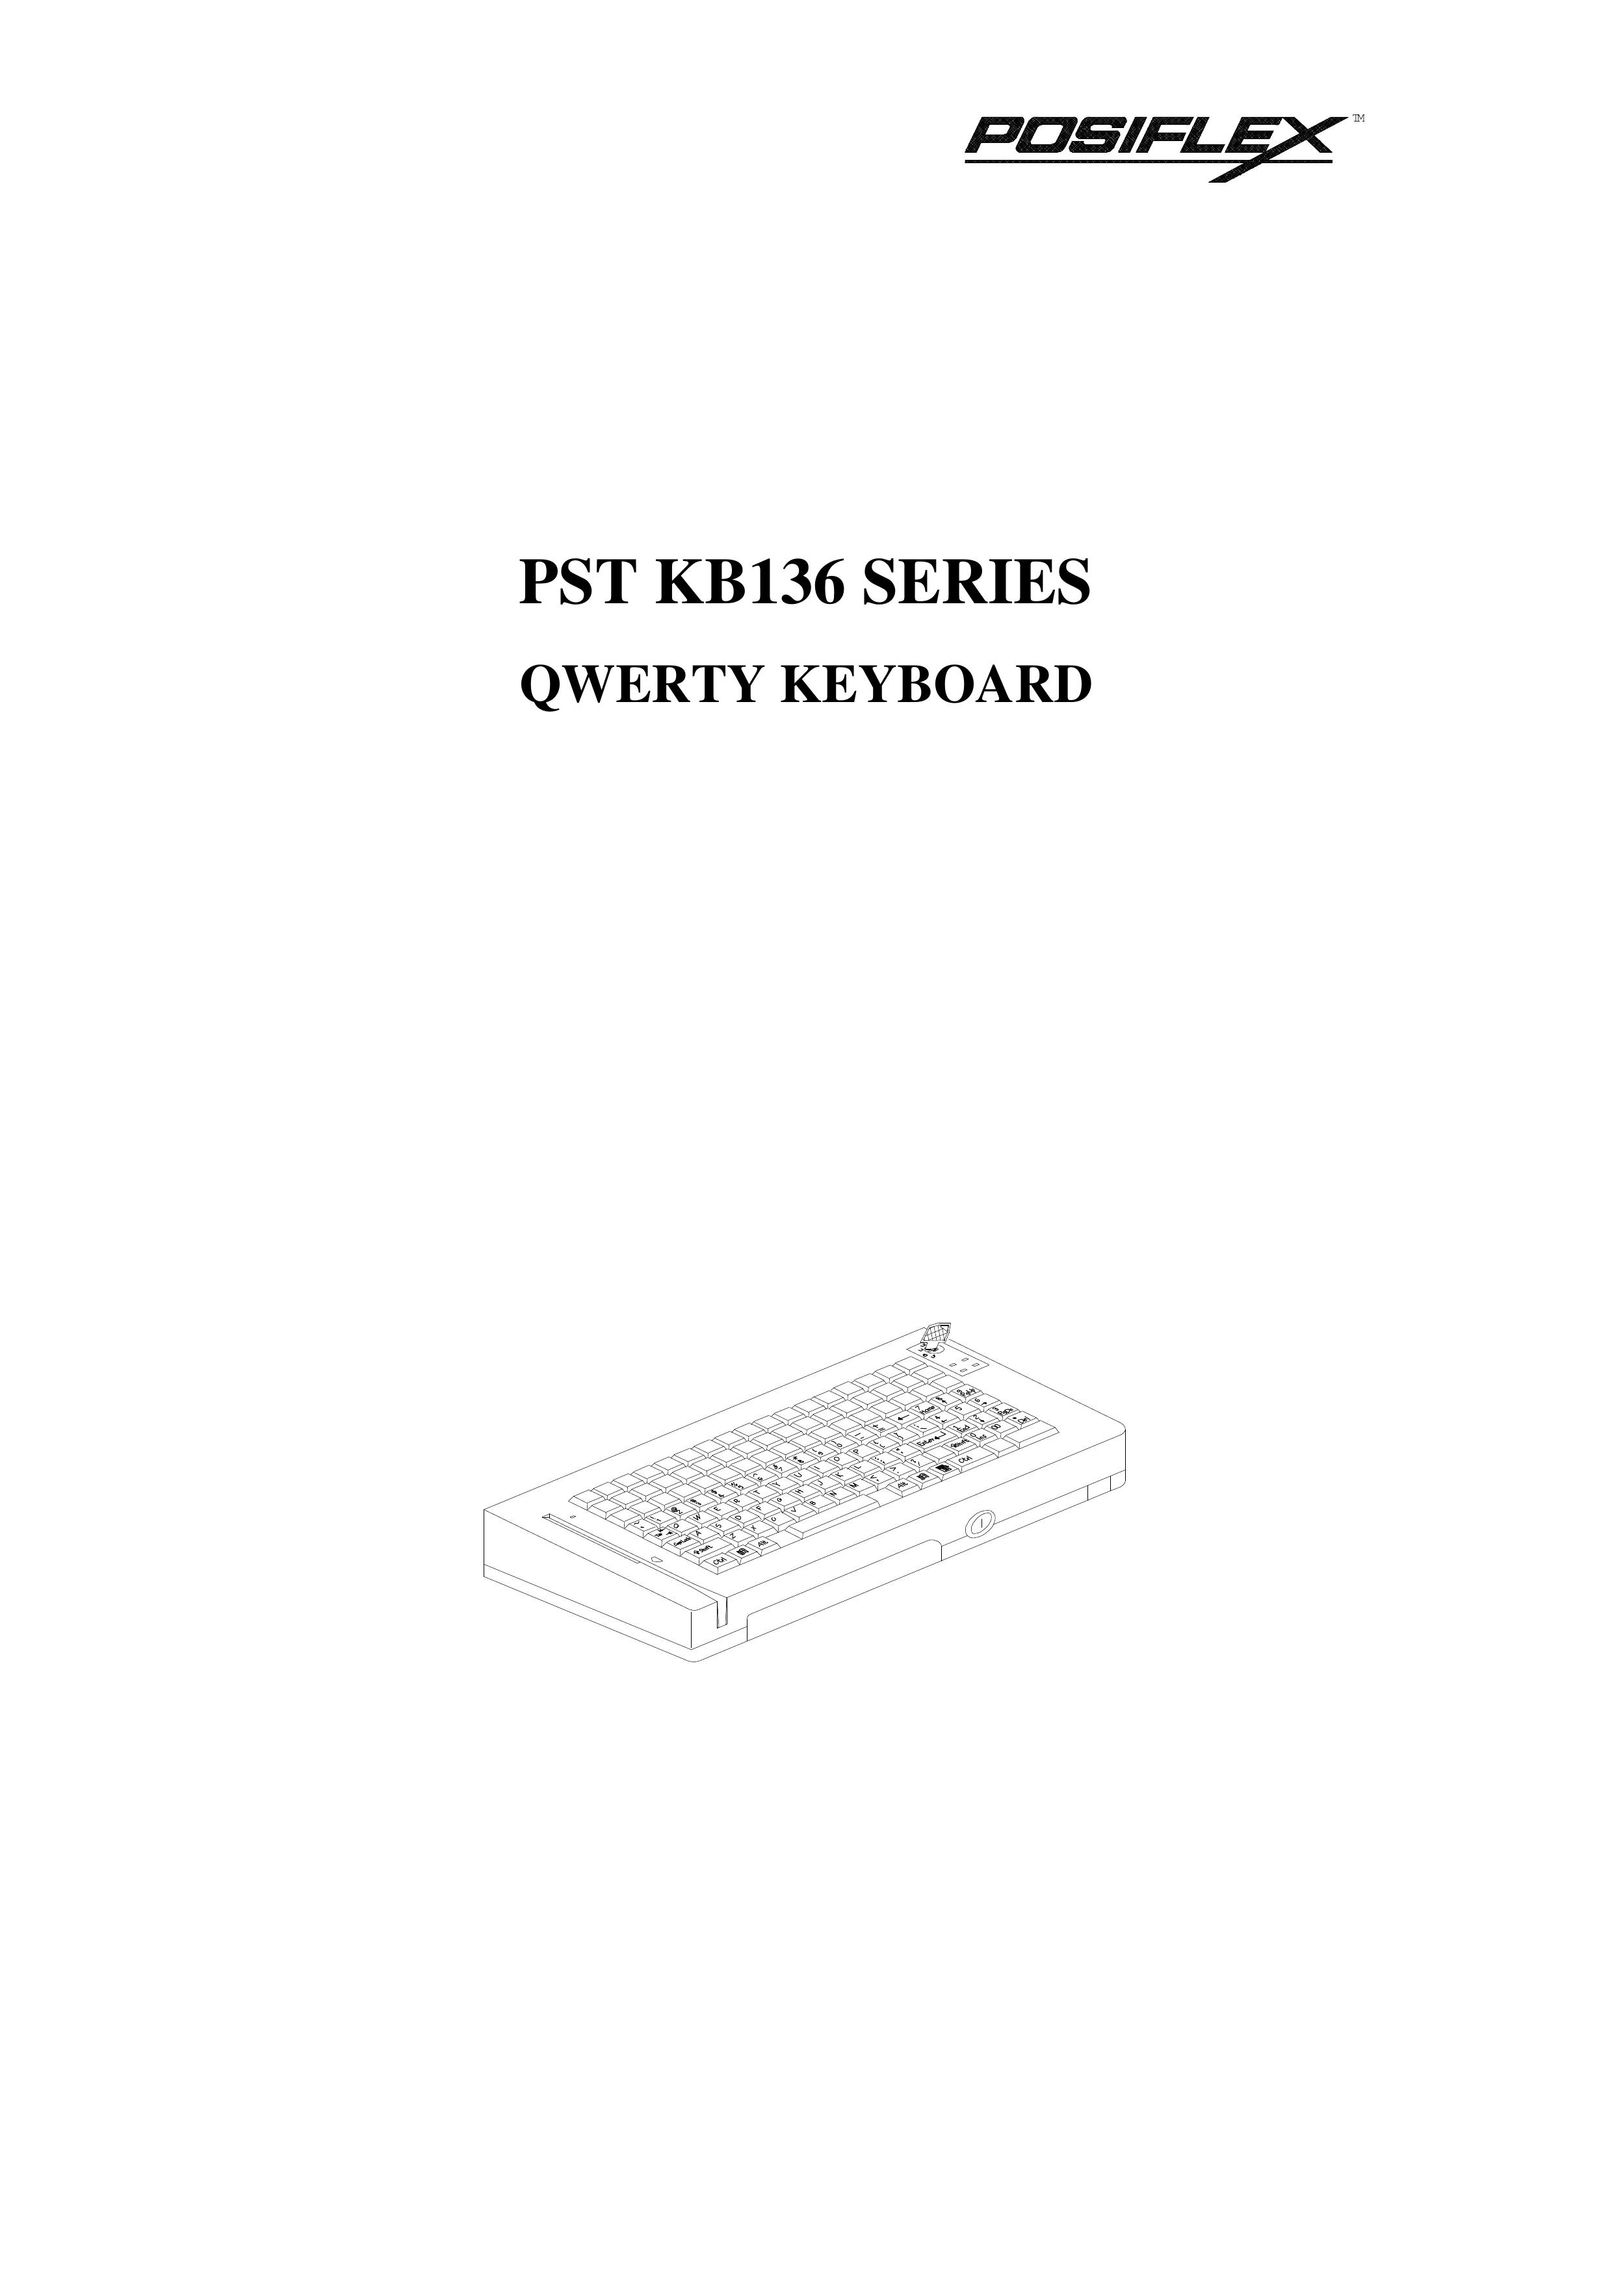 POSIFLEX Business Machines PST KB136 Computer Keyboard User Manual